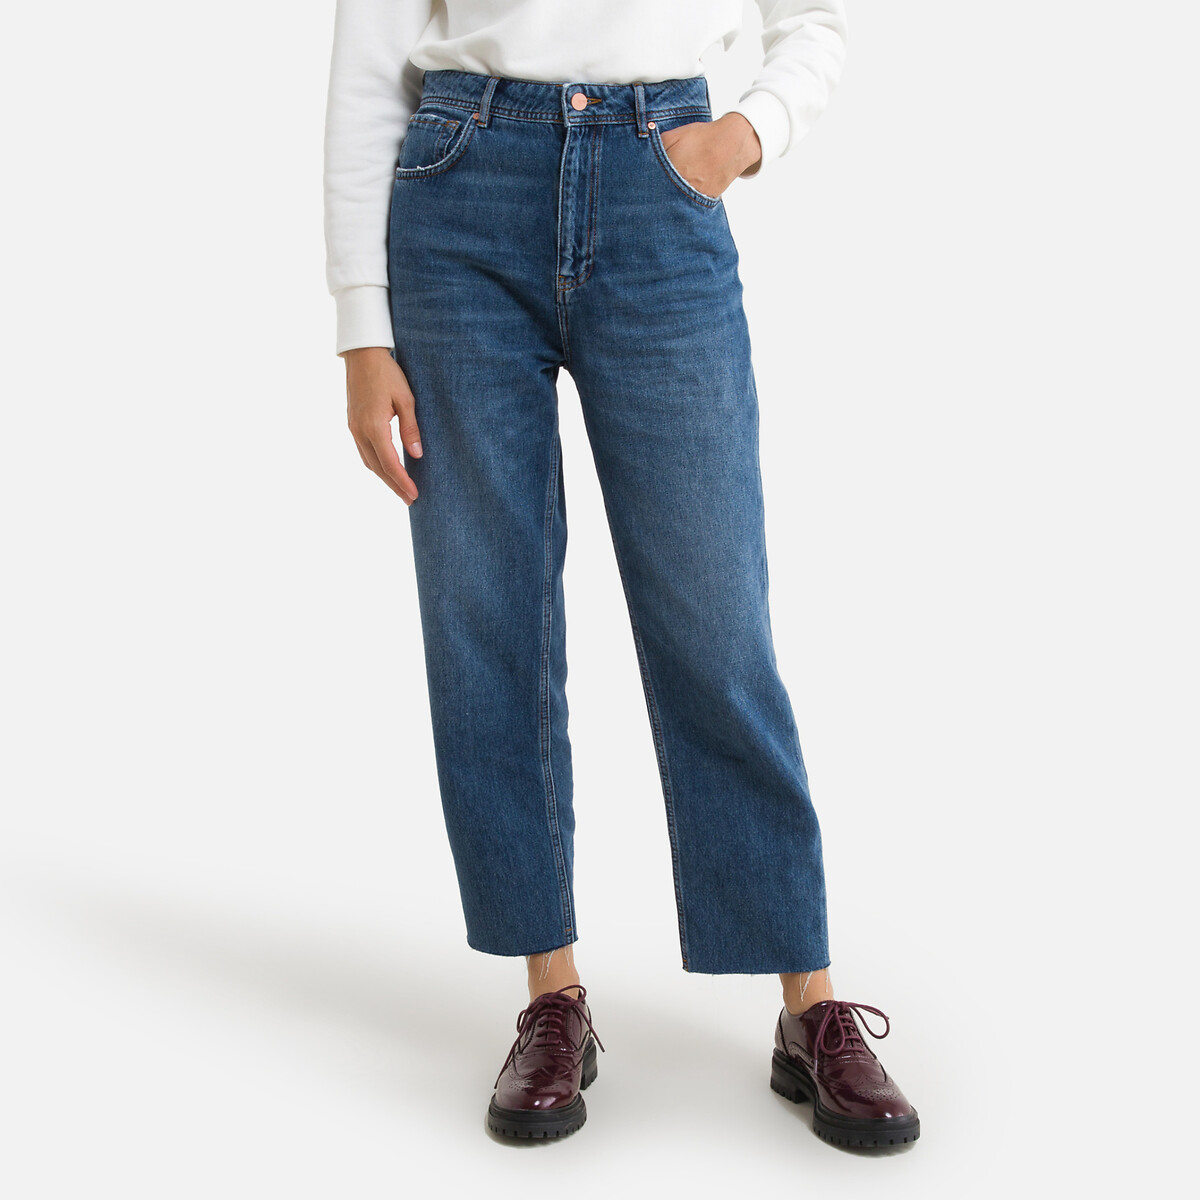 Niagara wide leg jeans with high waist, length 26